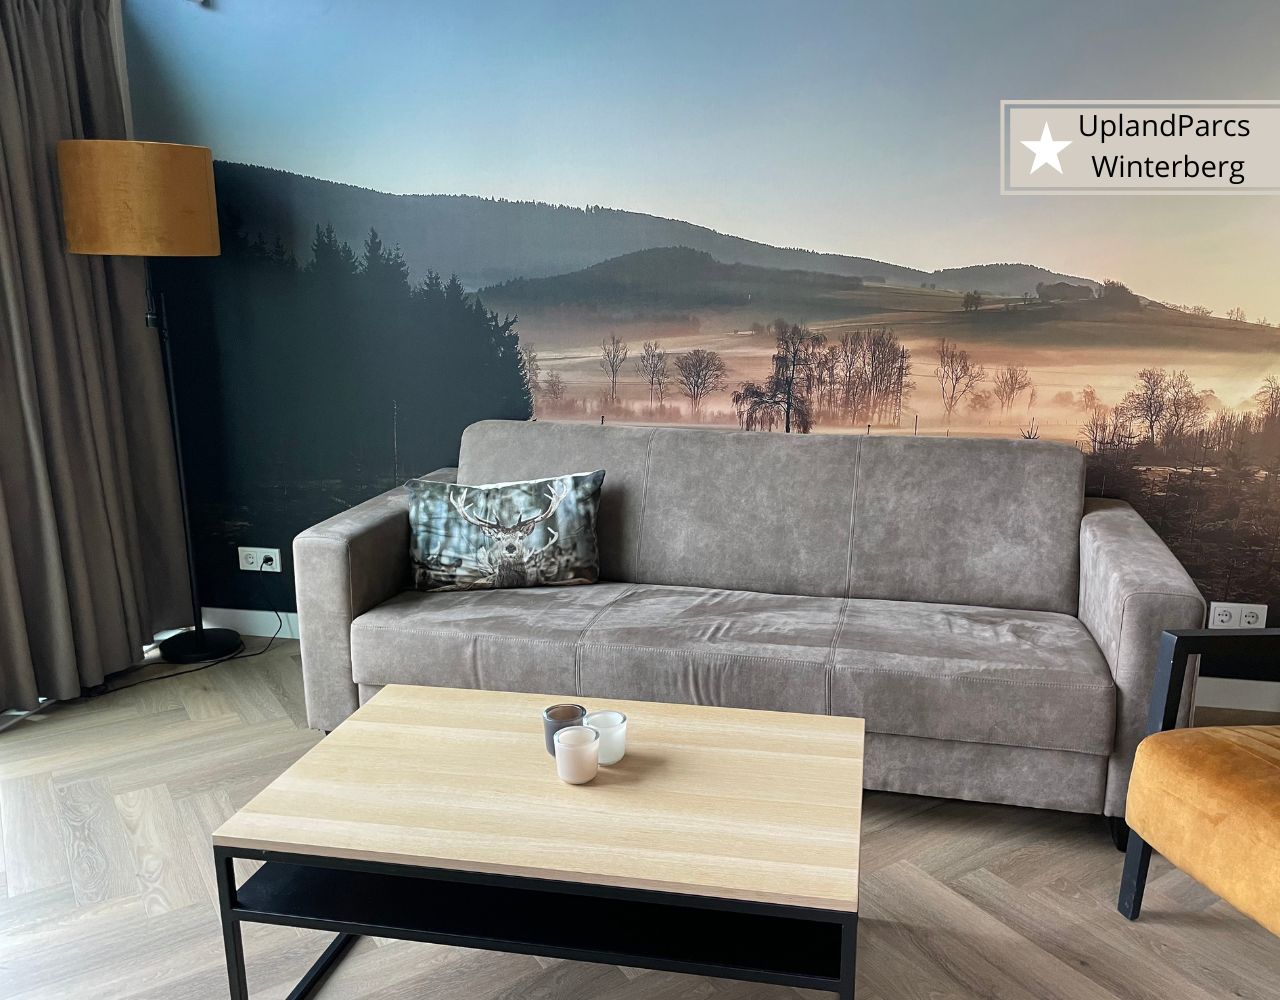 UplandParcs Winterberg - Sofa